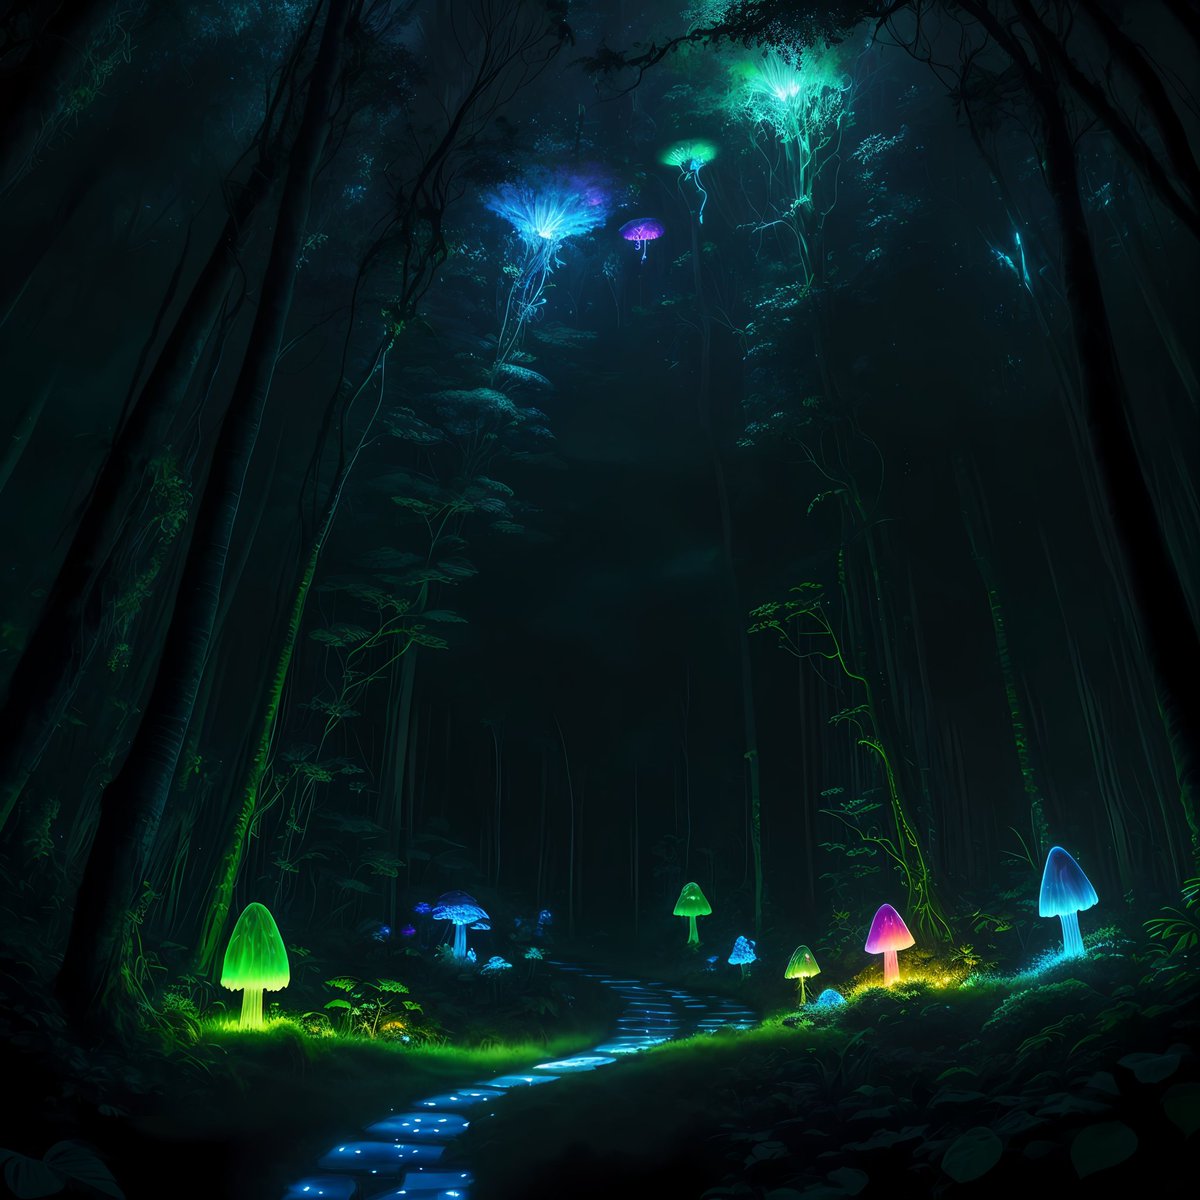 #NighttimeForest #Bioluminescent #Mushrooms #SurrealScene #NatureWonders #GlowingFungi #MysticalExperience #DiscoverNature #midjourney #aiart #midjourneyart #midjourneyai #aiartcommunity #digitalart #nft #midjourneyartwork #generativeart #followers #photography